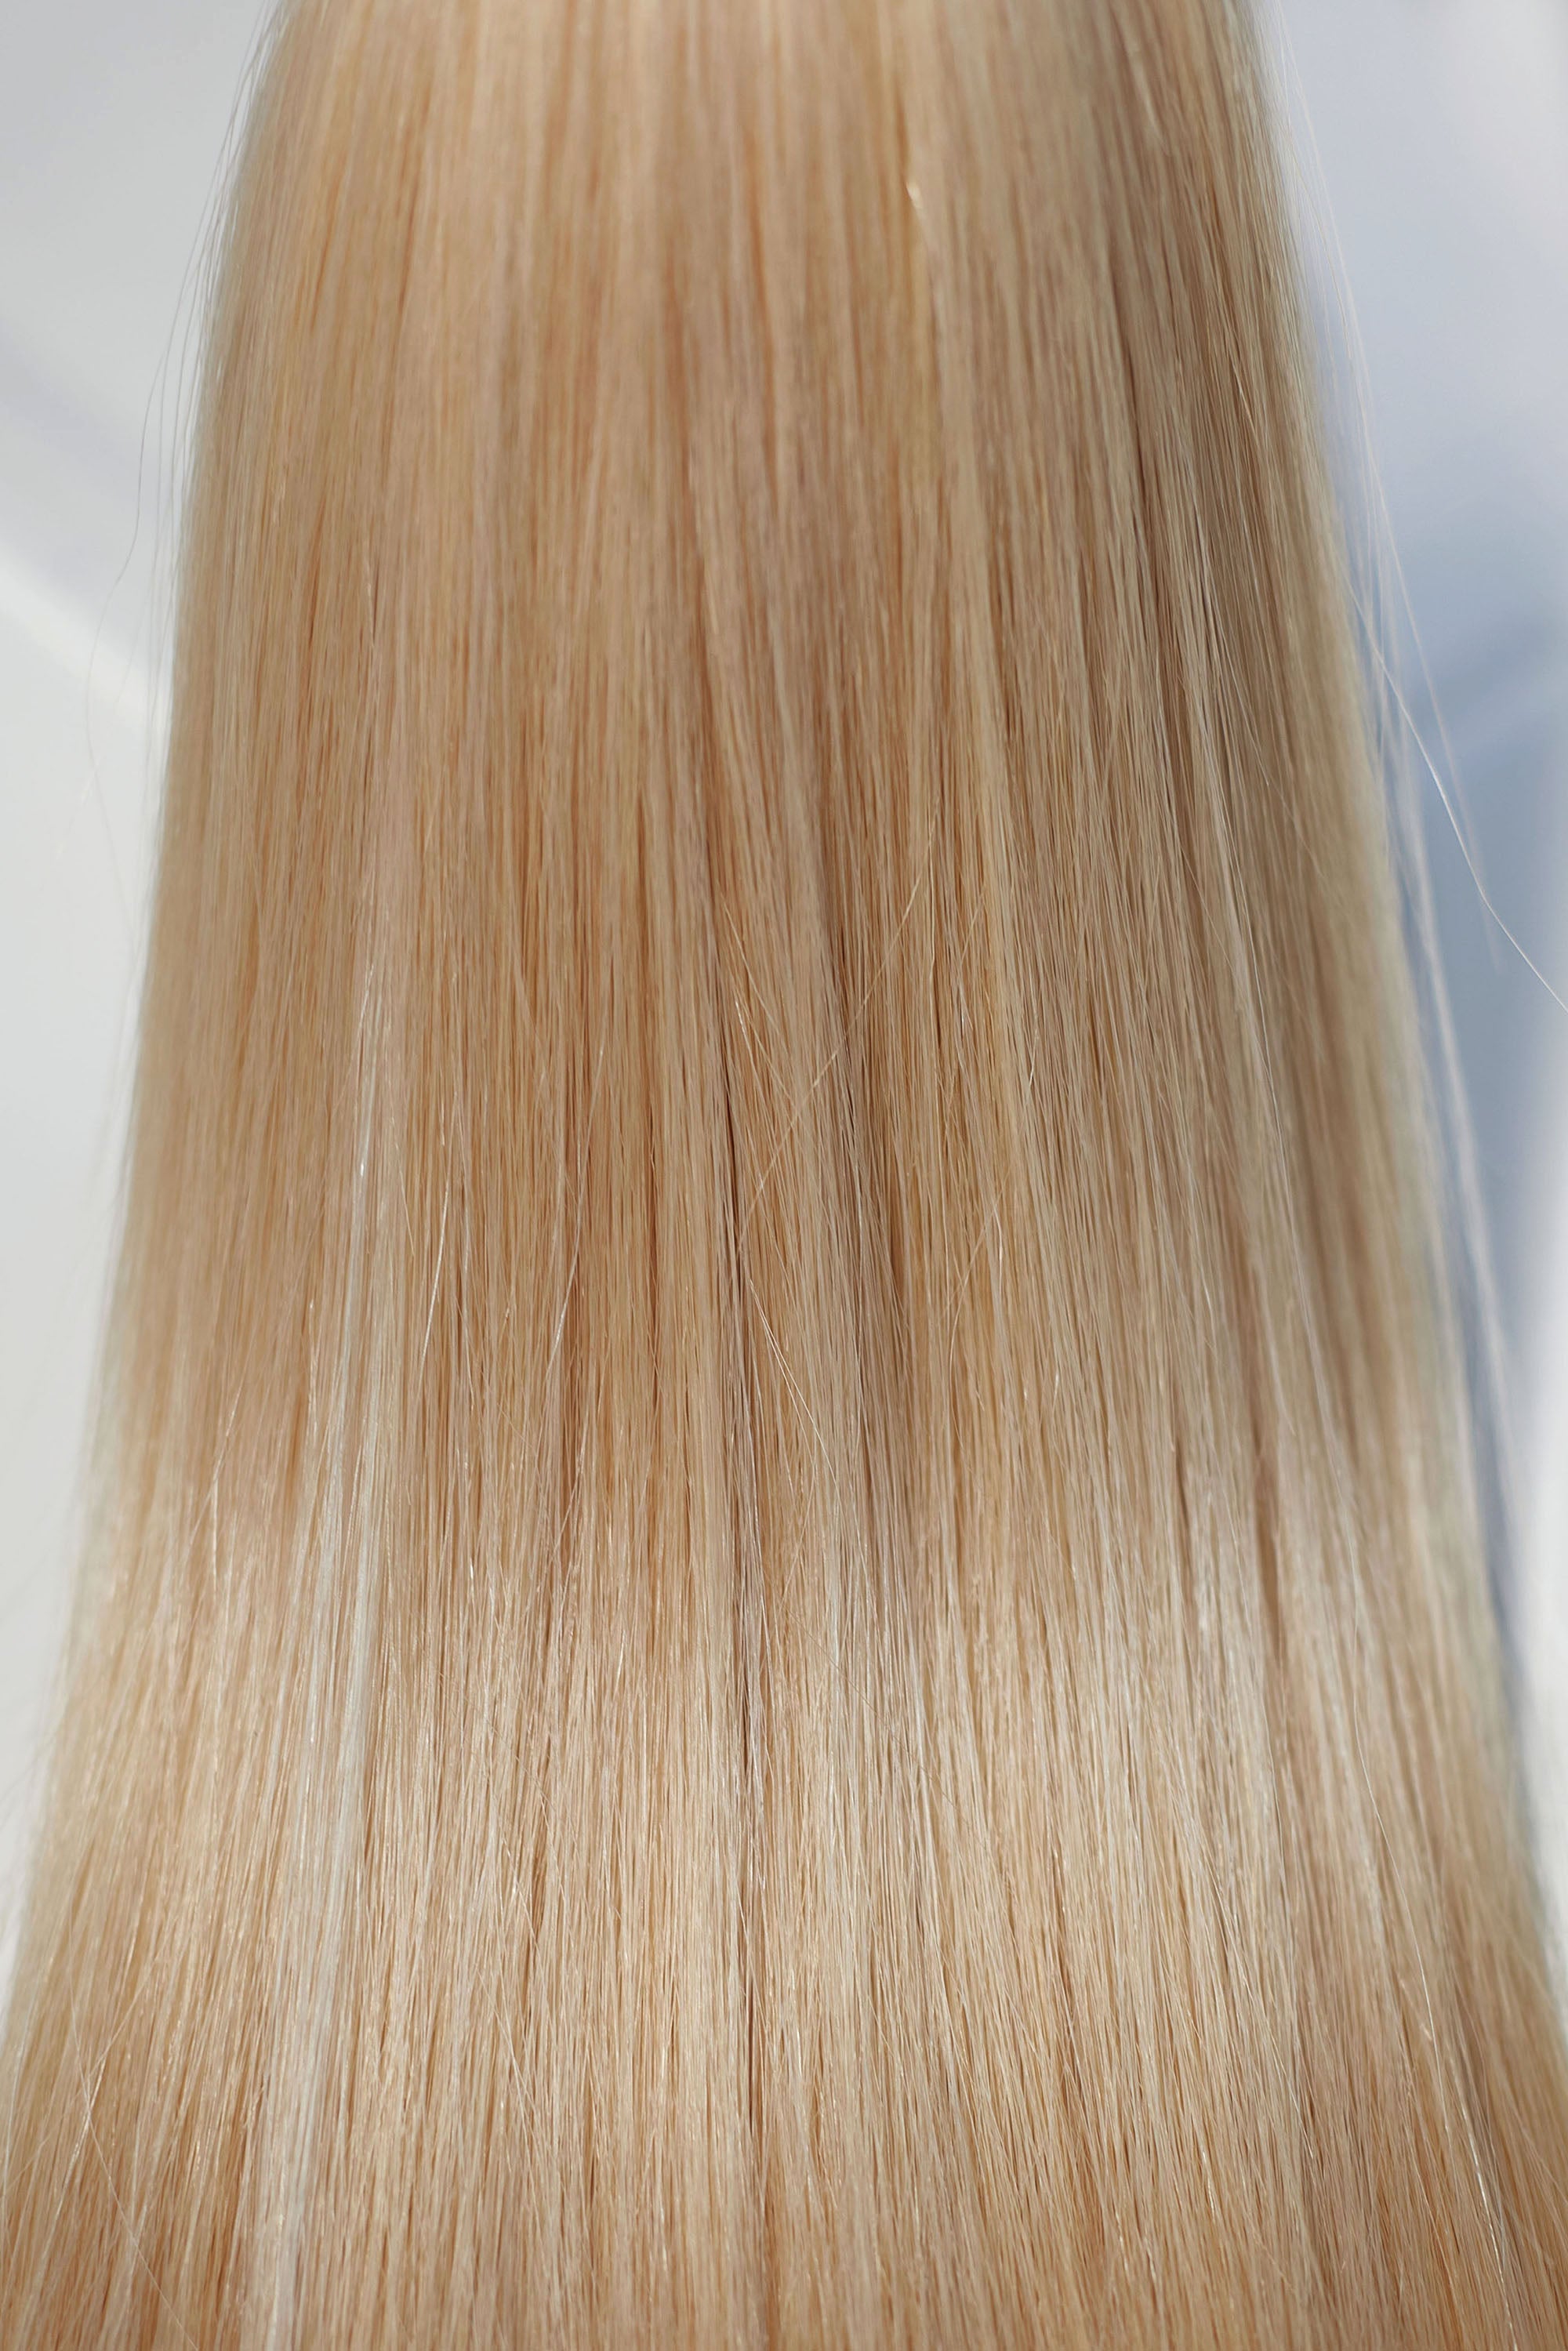 Behair professional Keratin Tip "Premium" 24" (60cm) Natural Straight Light Gold Blond #24 - 25g (1g each pcs) hair extensions